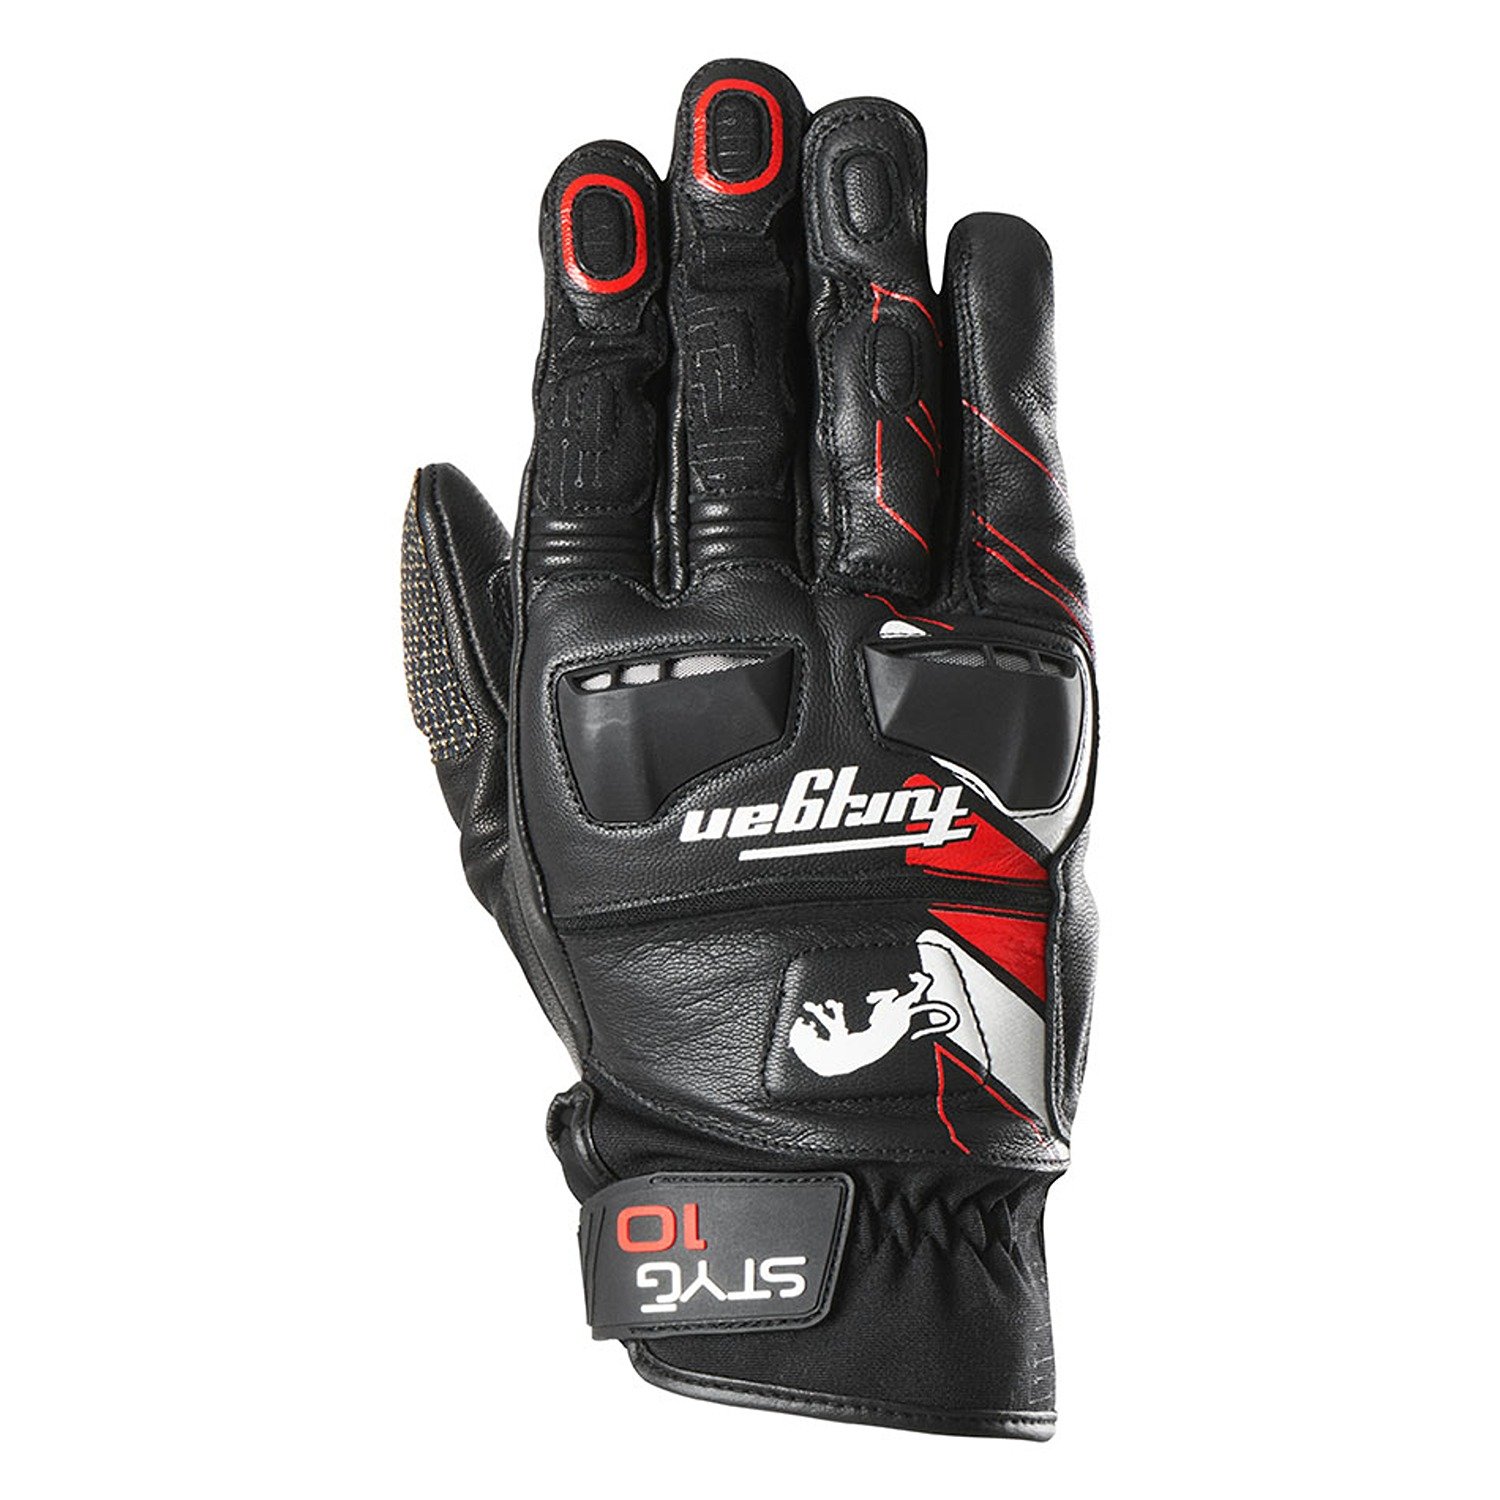 Image of Furygan Styg10 Gloves Black White Red Taille S